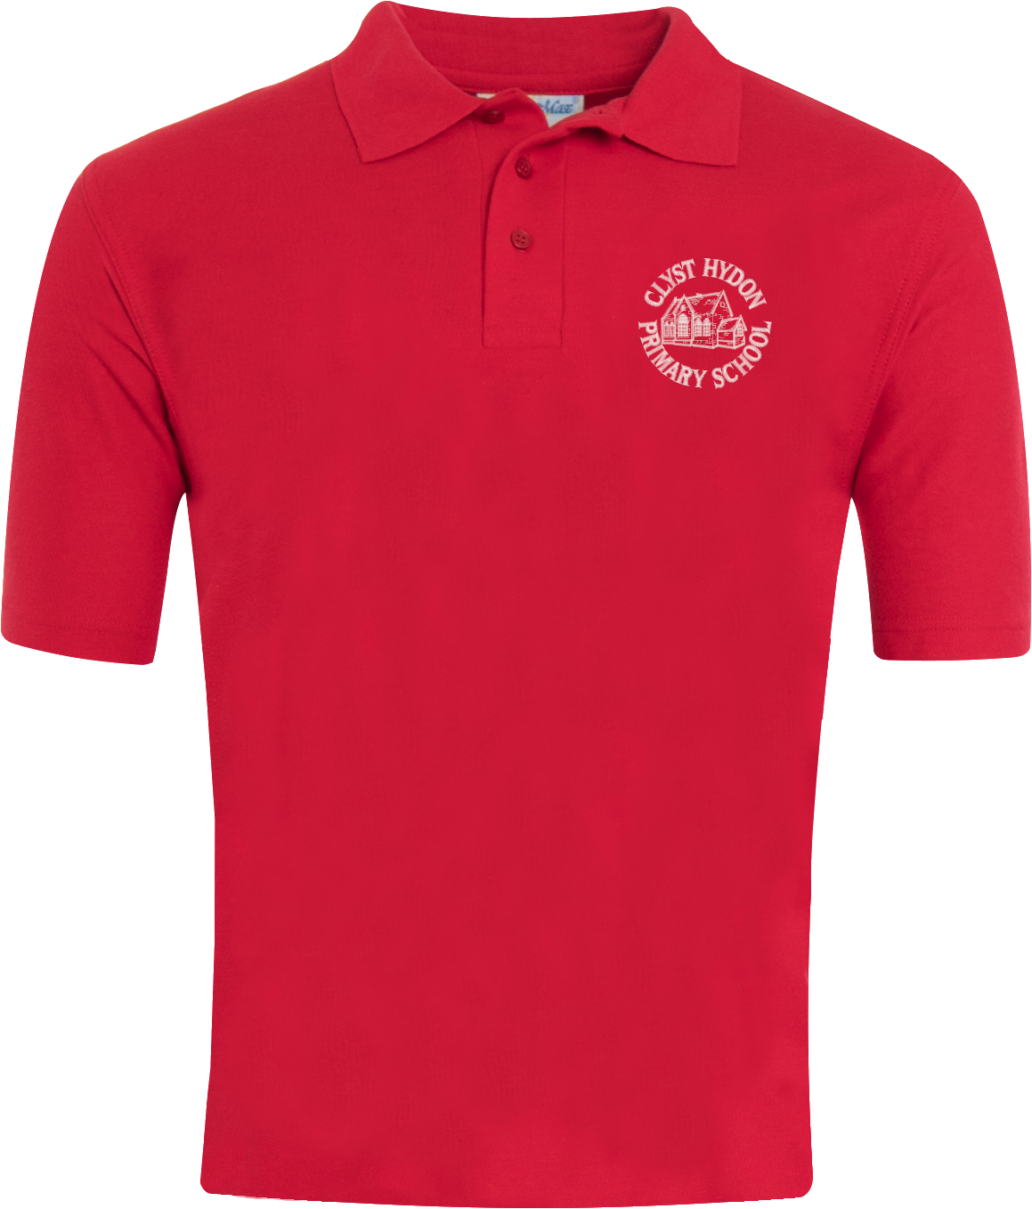 Clyst Hydon Primary School Polo Shirt